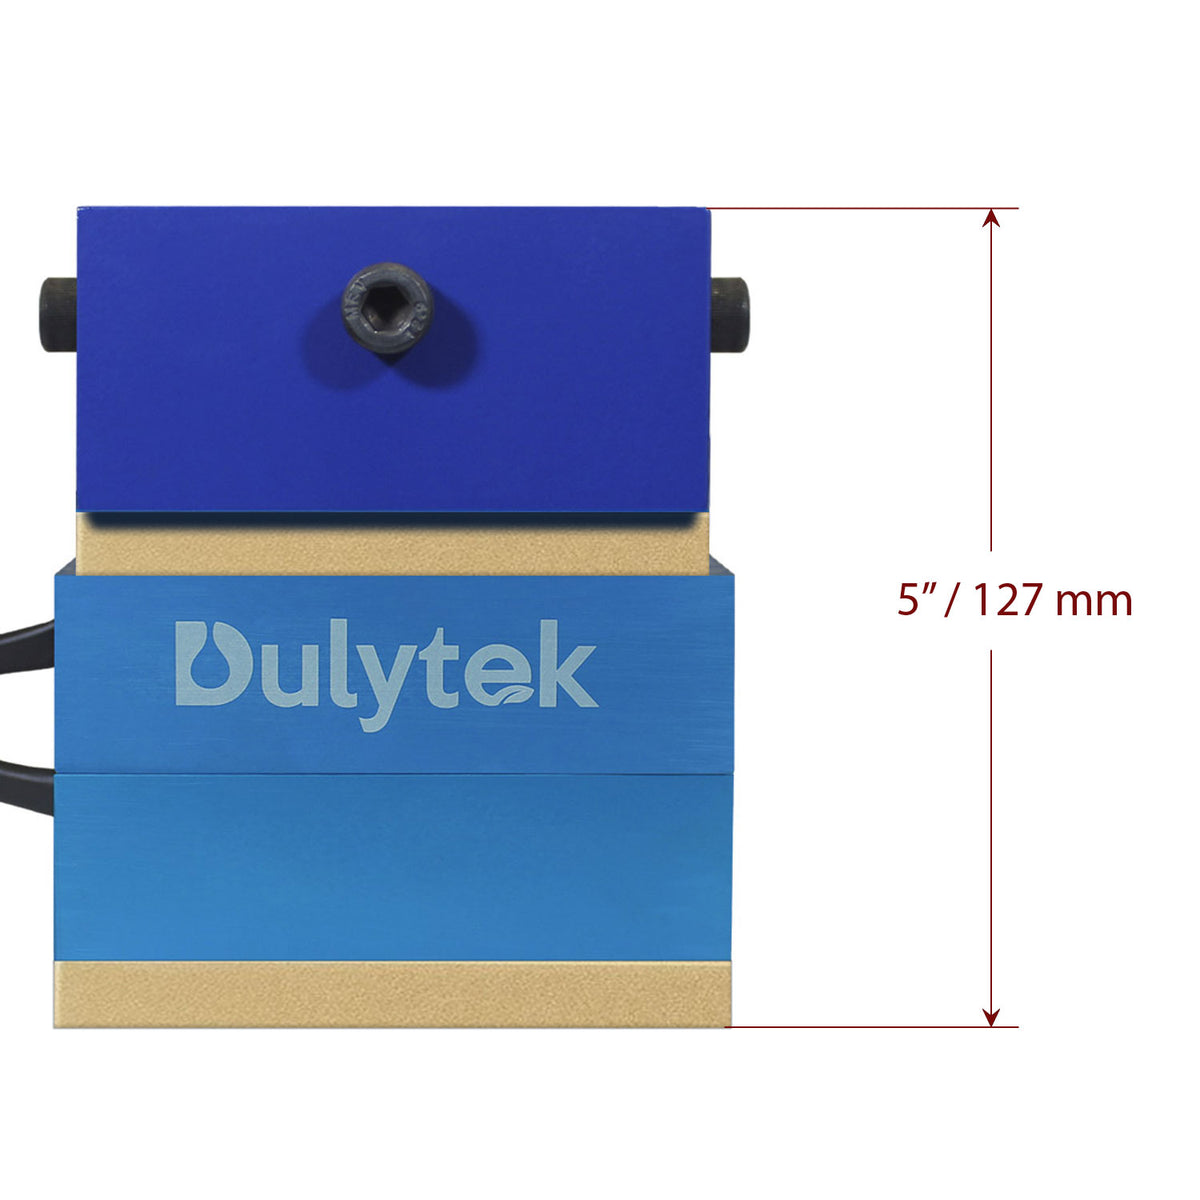 Dulytek DM2 Personal Heat Press Machine, 2 Ton / 4000 lbs Force, Well  Aligned 3 x 3 Dual Heat Plates Plus Starter Accessories Kit - Precise